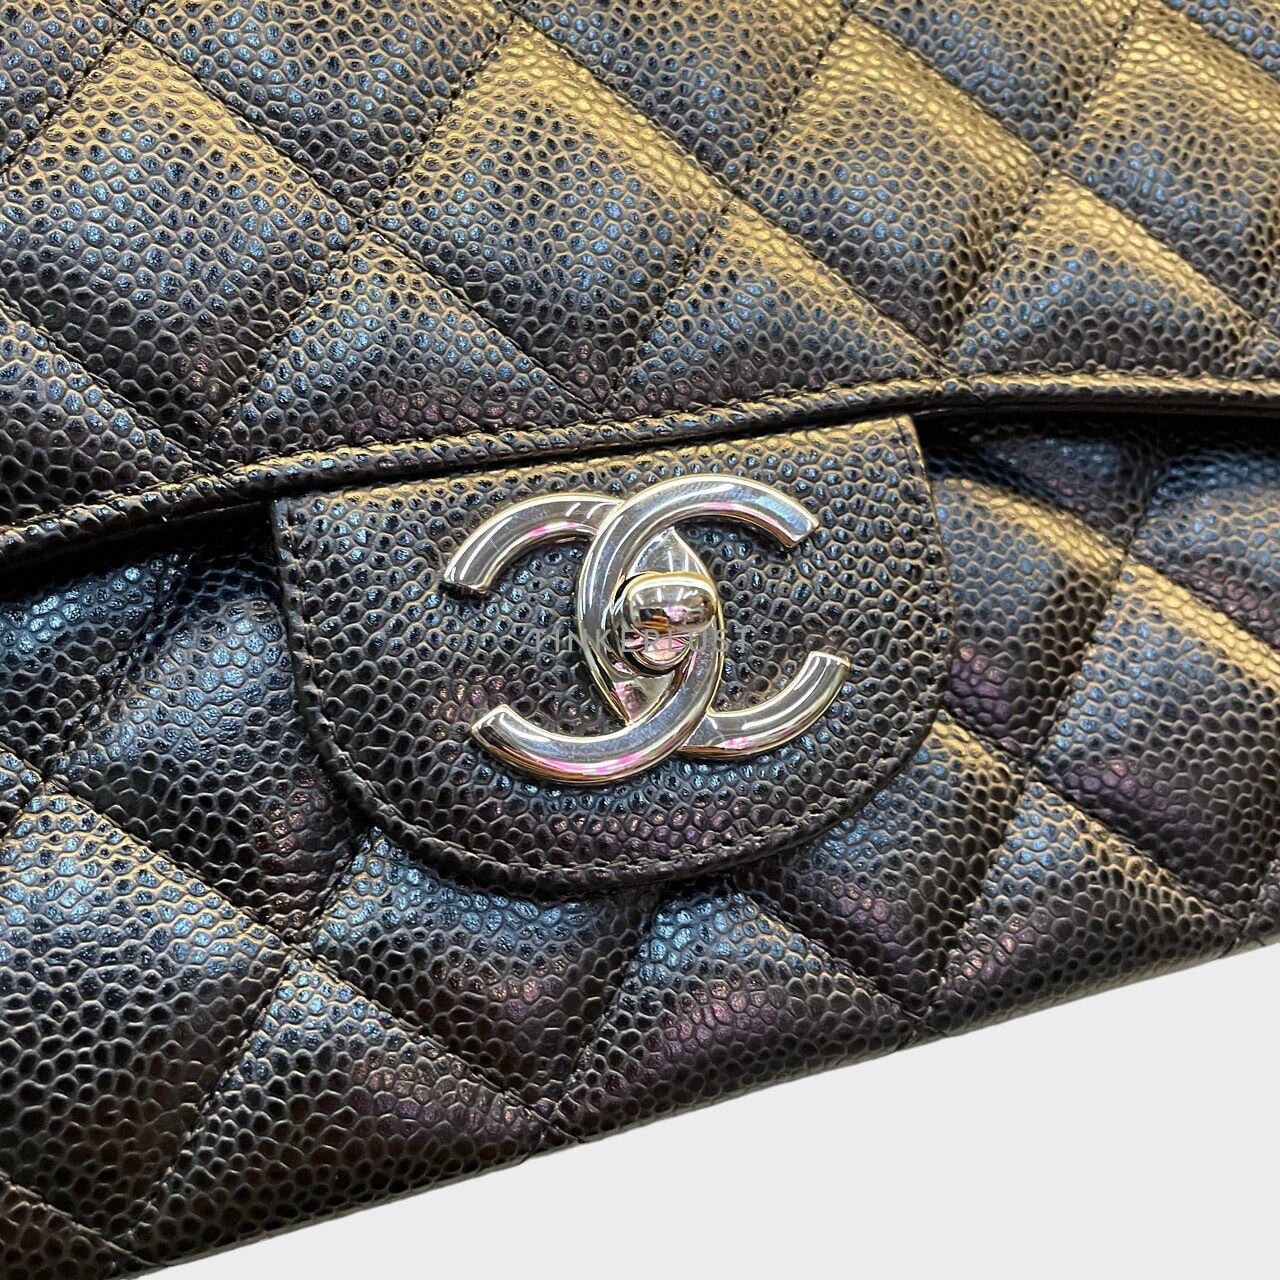 Chanel Maxi Black Caviar Double Flap #23 SHW Shoulderbag